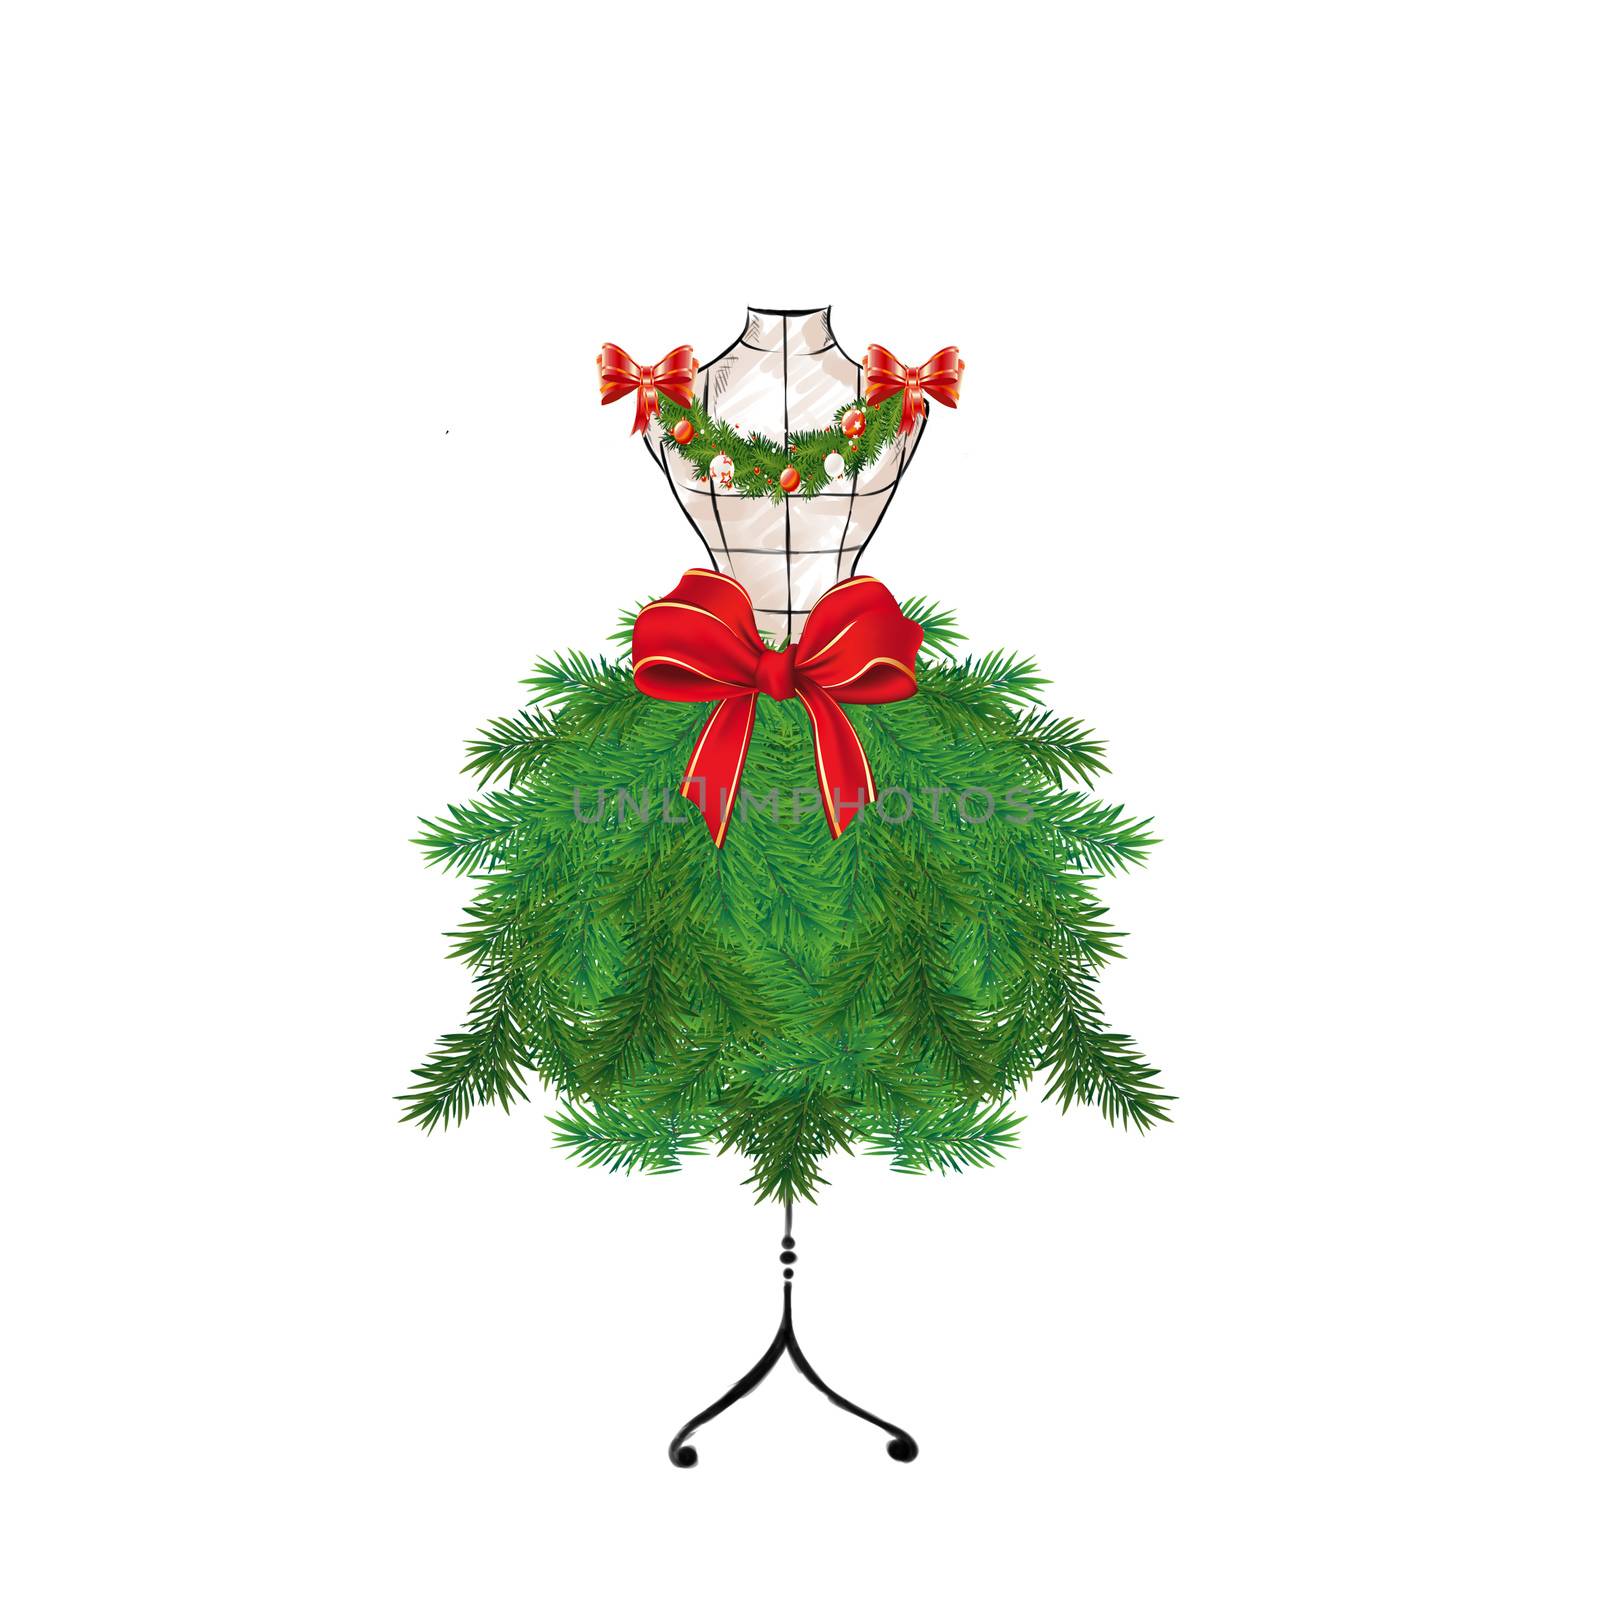 Seasonal Fashion Illustration - Christmas tree on a mannequin by GGillustrations